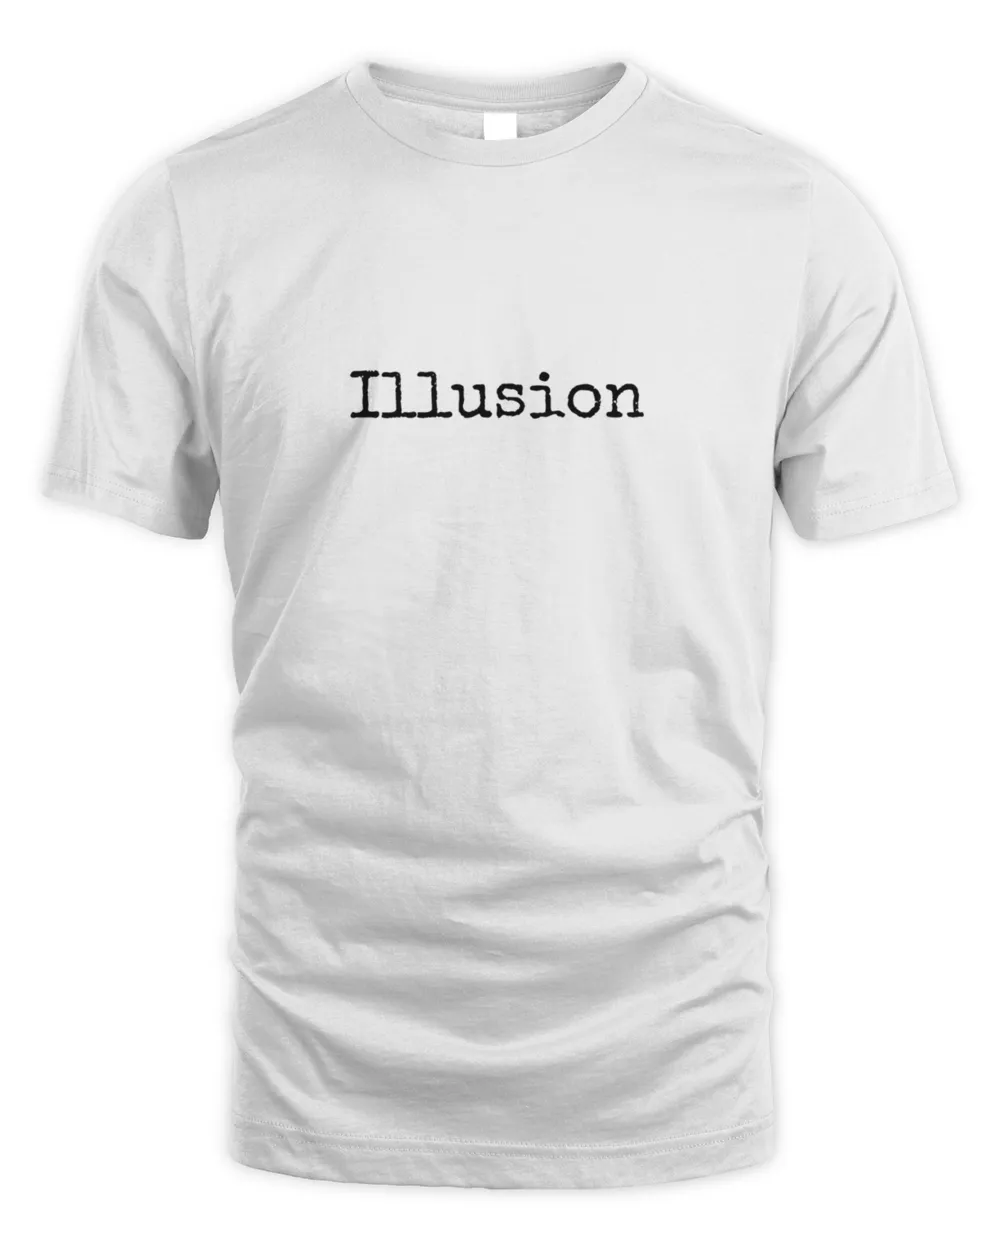 Illusion quotes 8991 T-Shirt